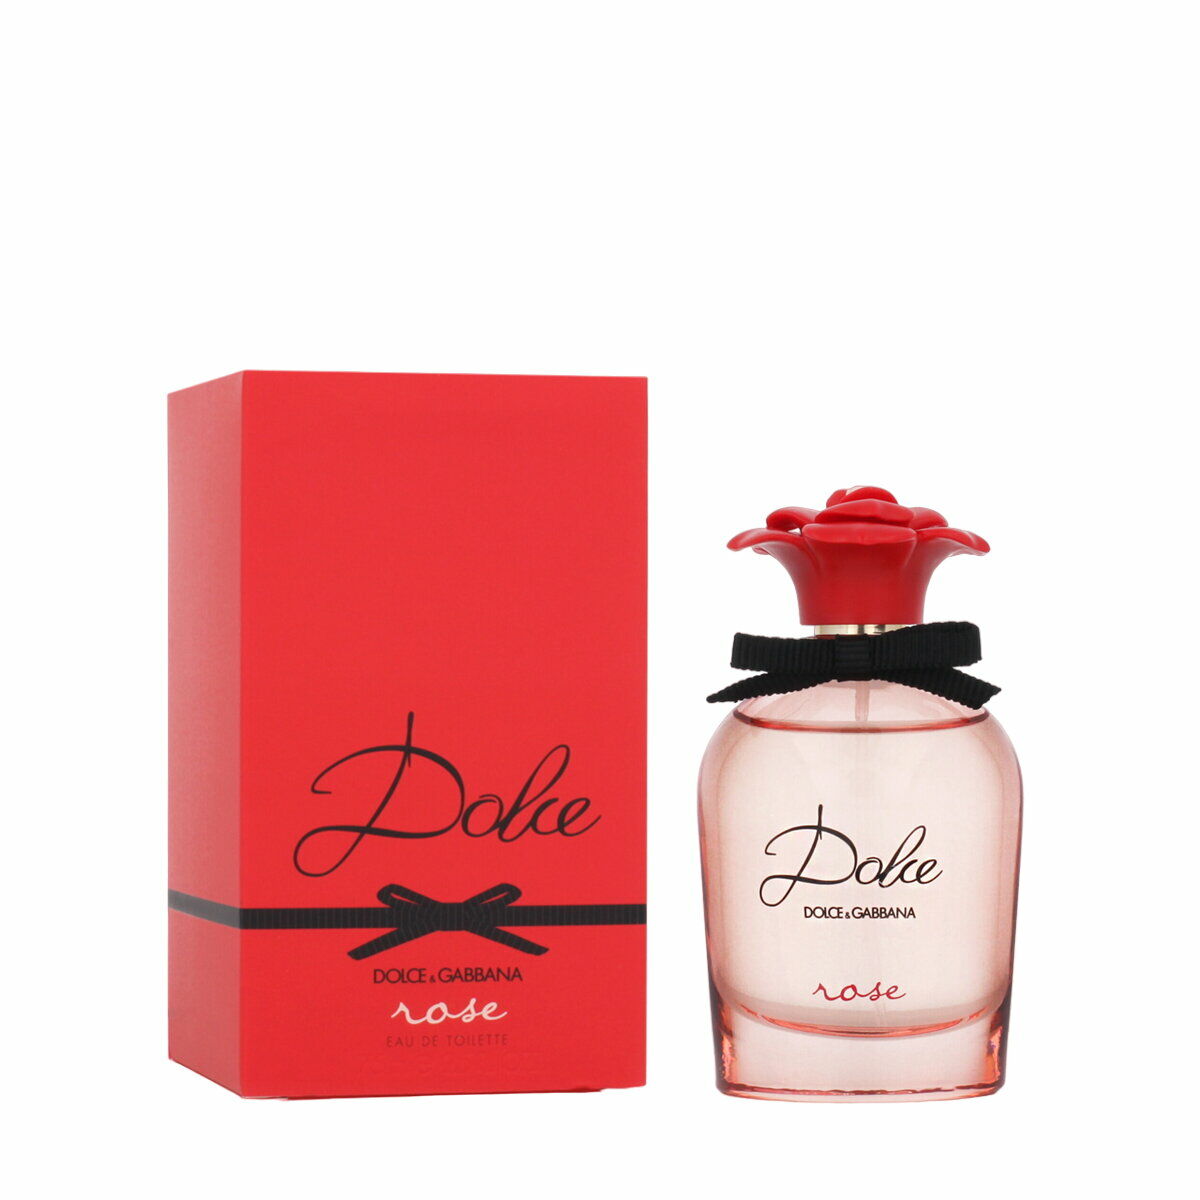 Parfum Femme Dolce & Gabbana EDT Dolce Rose 75 ml